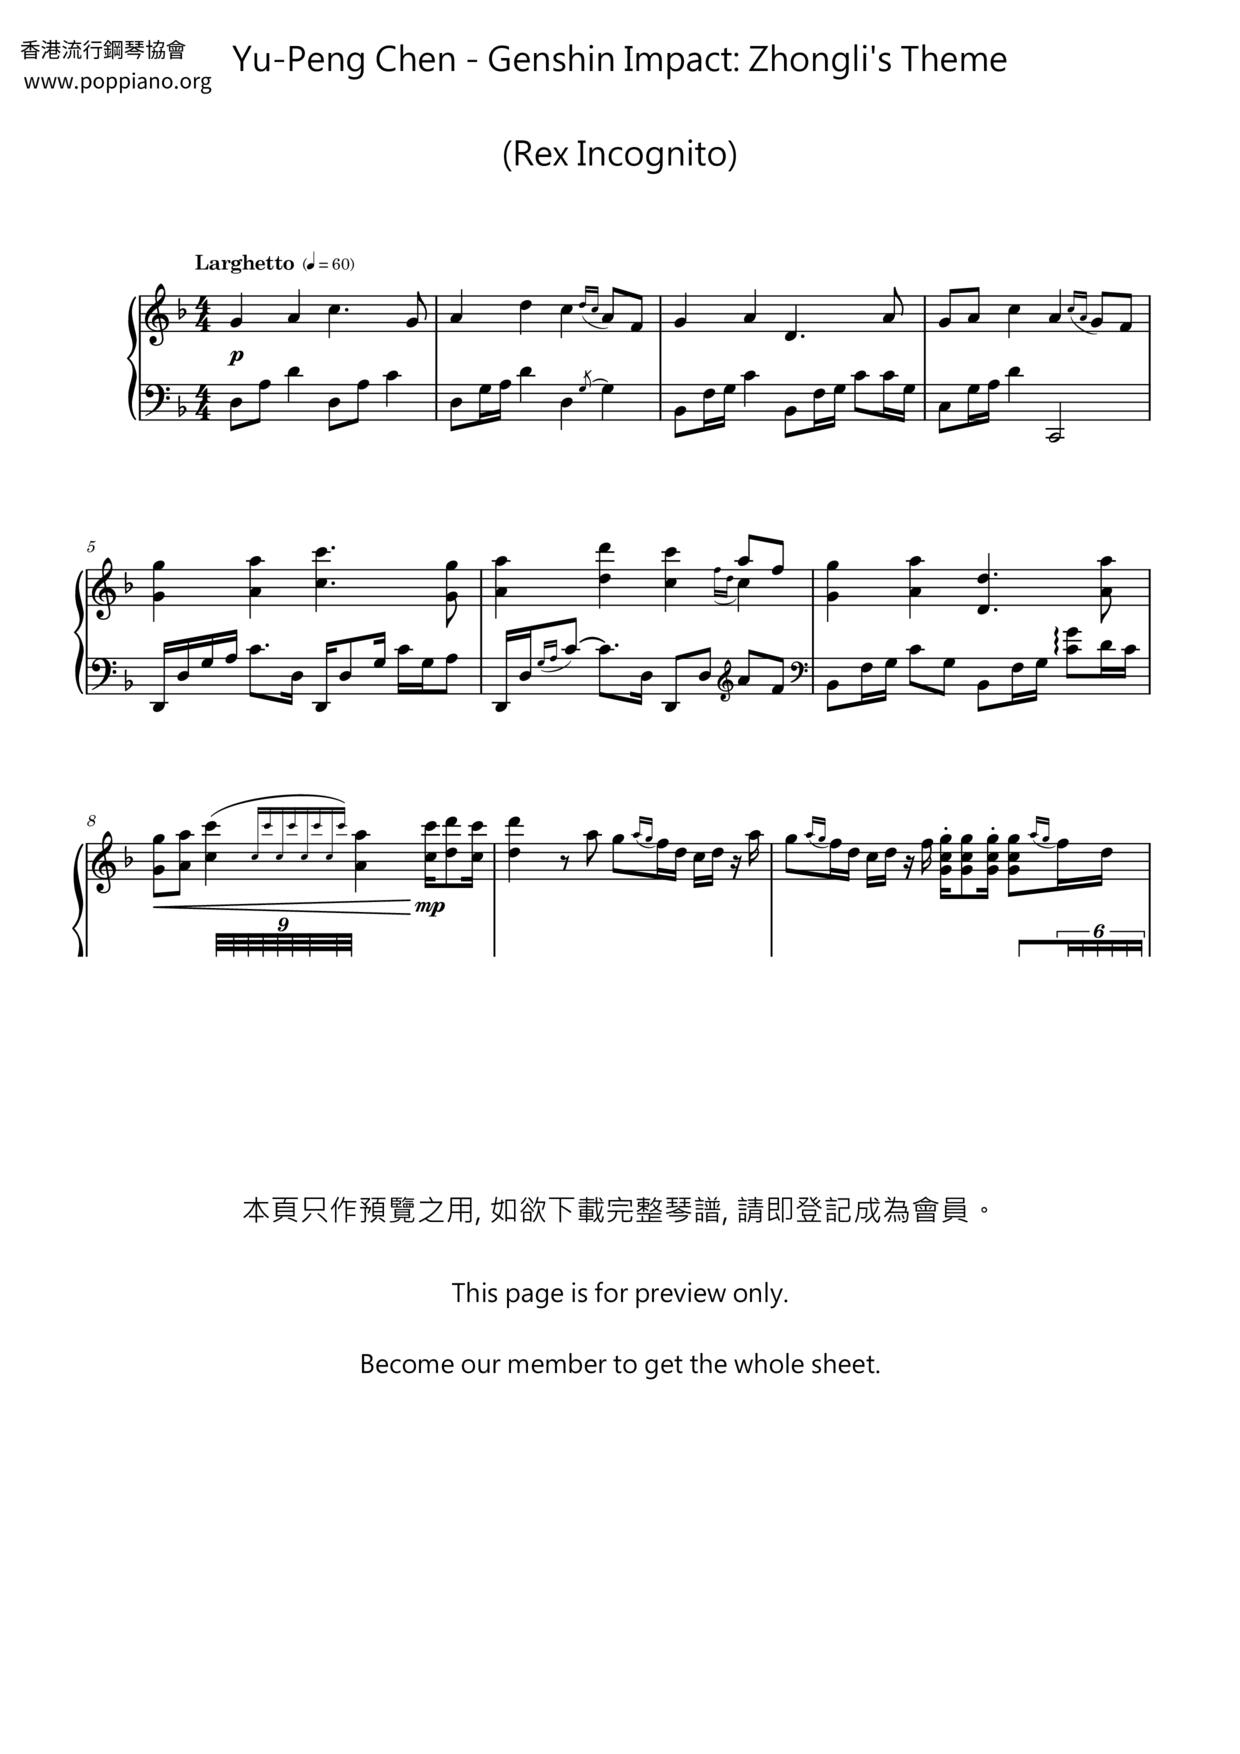 Genshin Impact: Zhongli's Theme (Rex Incognito) Score